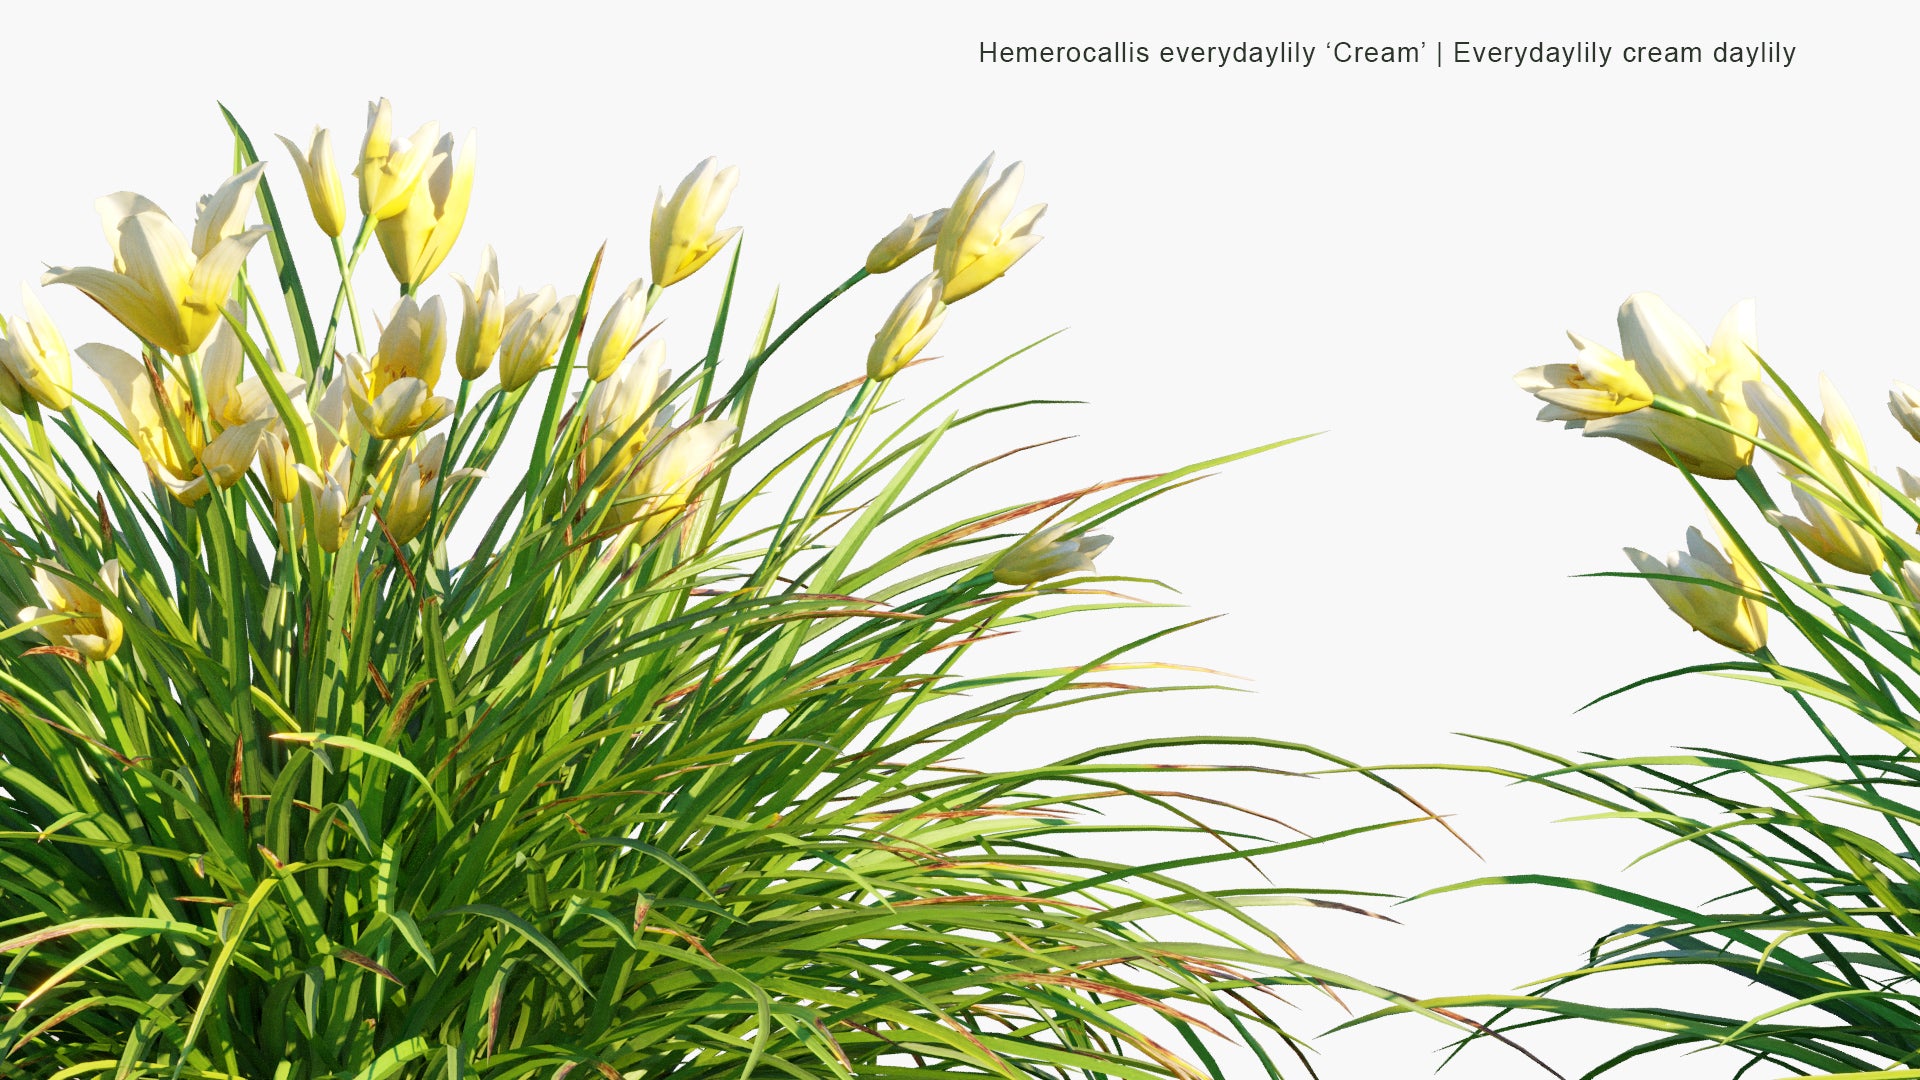 Hemerocallis Everydaylily 'Cream' - Everydaylily Cream Daylily